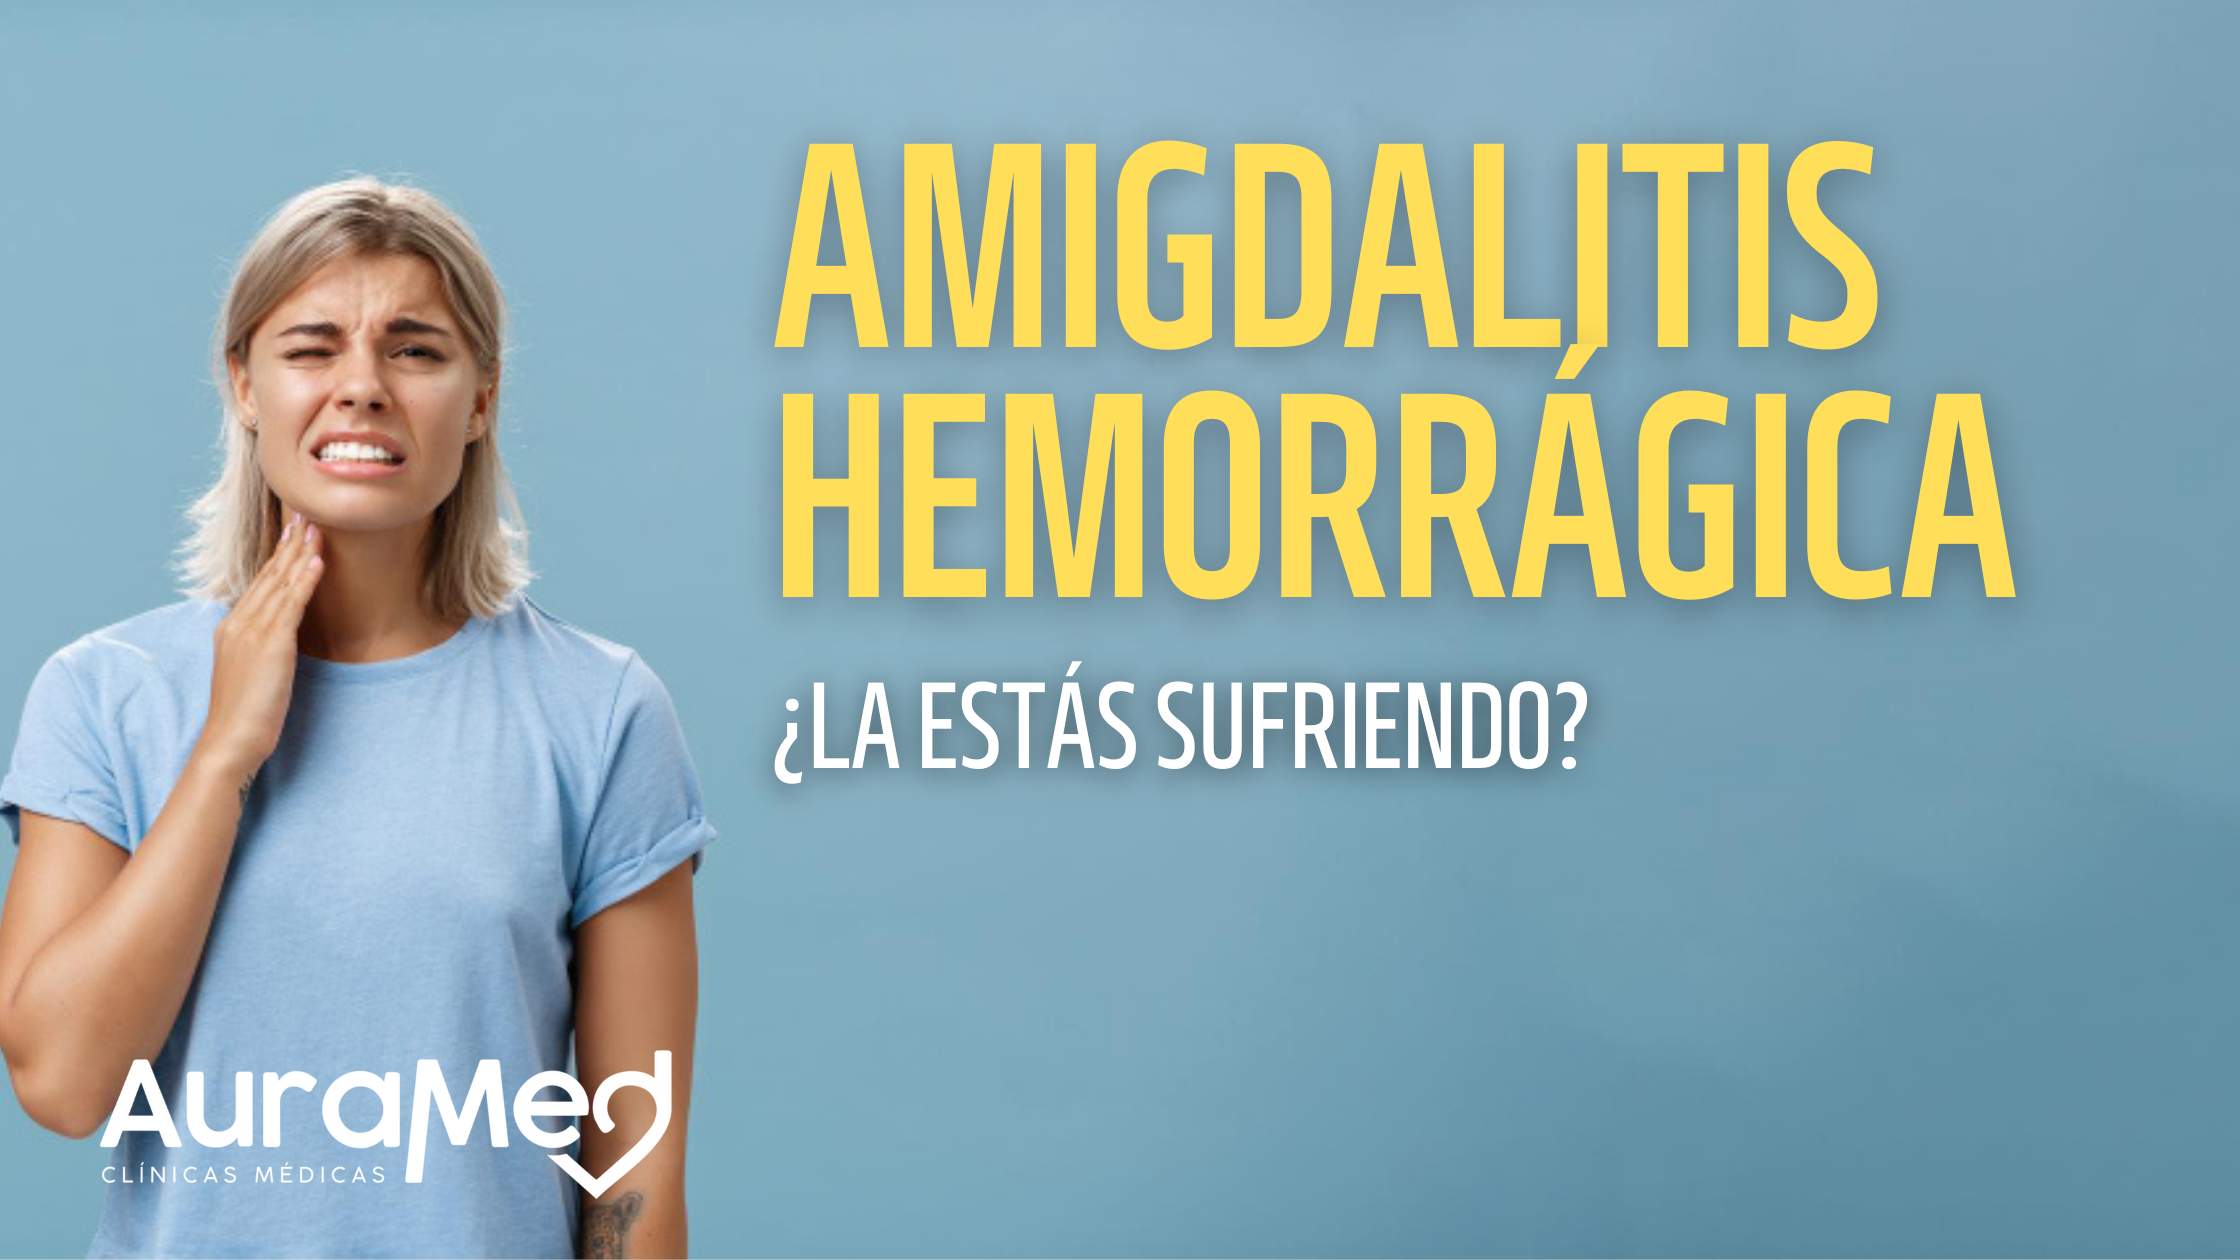 Auramed Amigdalitis hemorragica